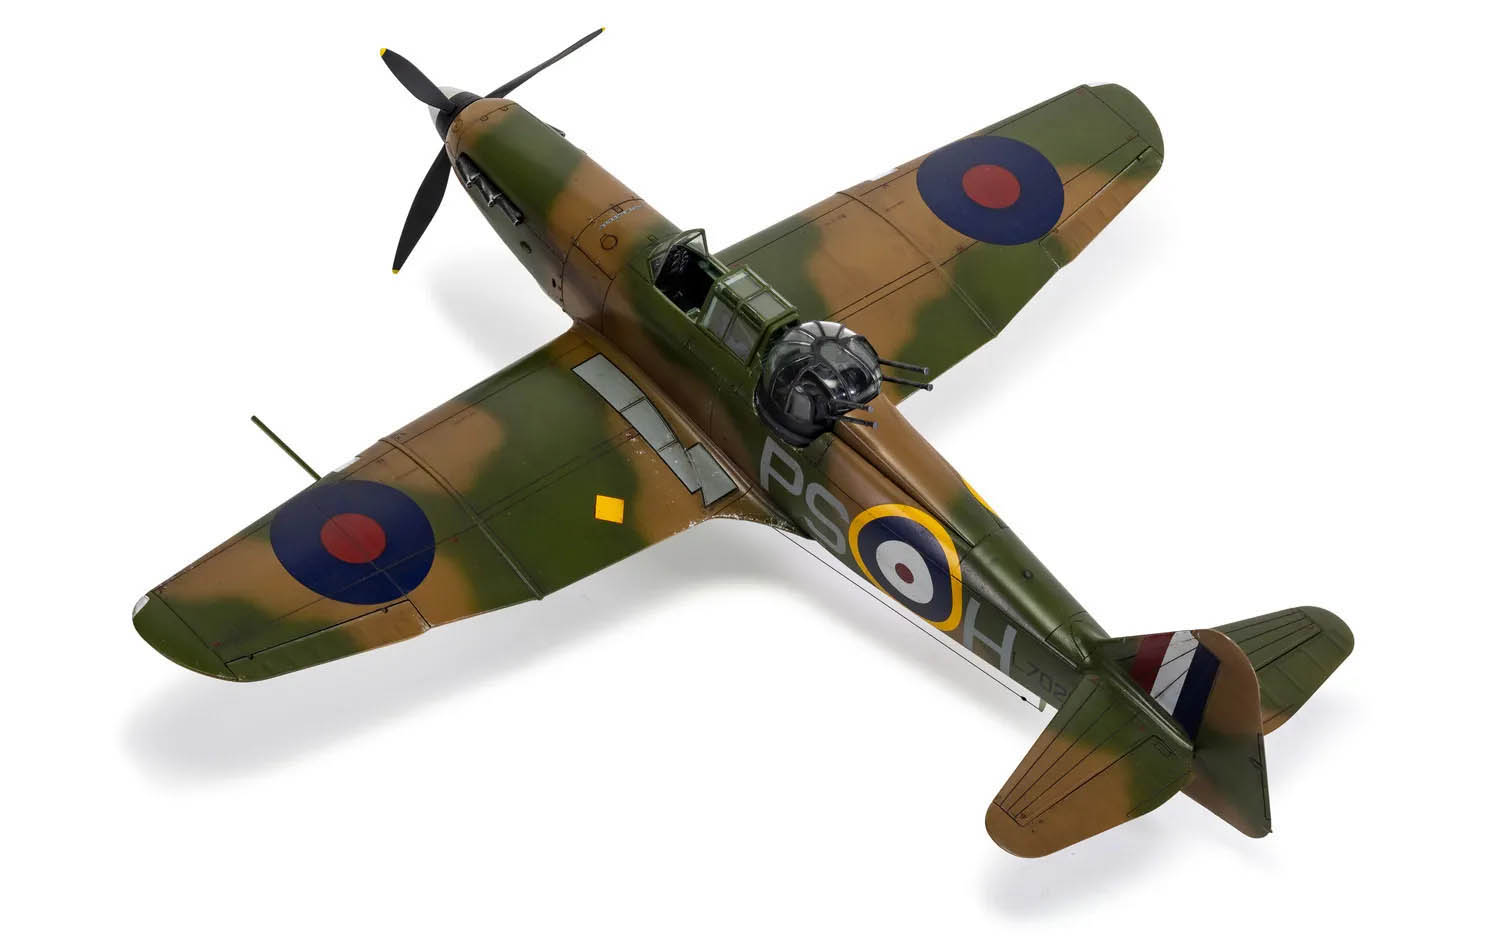 1/48 Boulton Paul Defiant Mk1 - A05128A